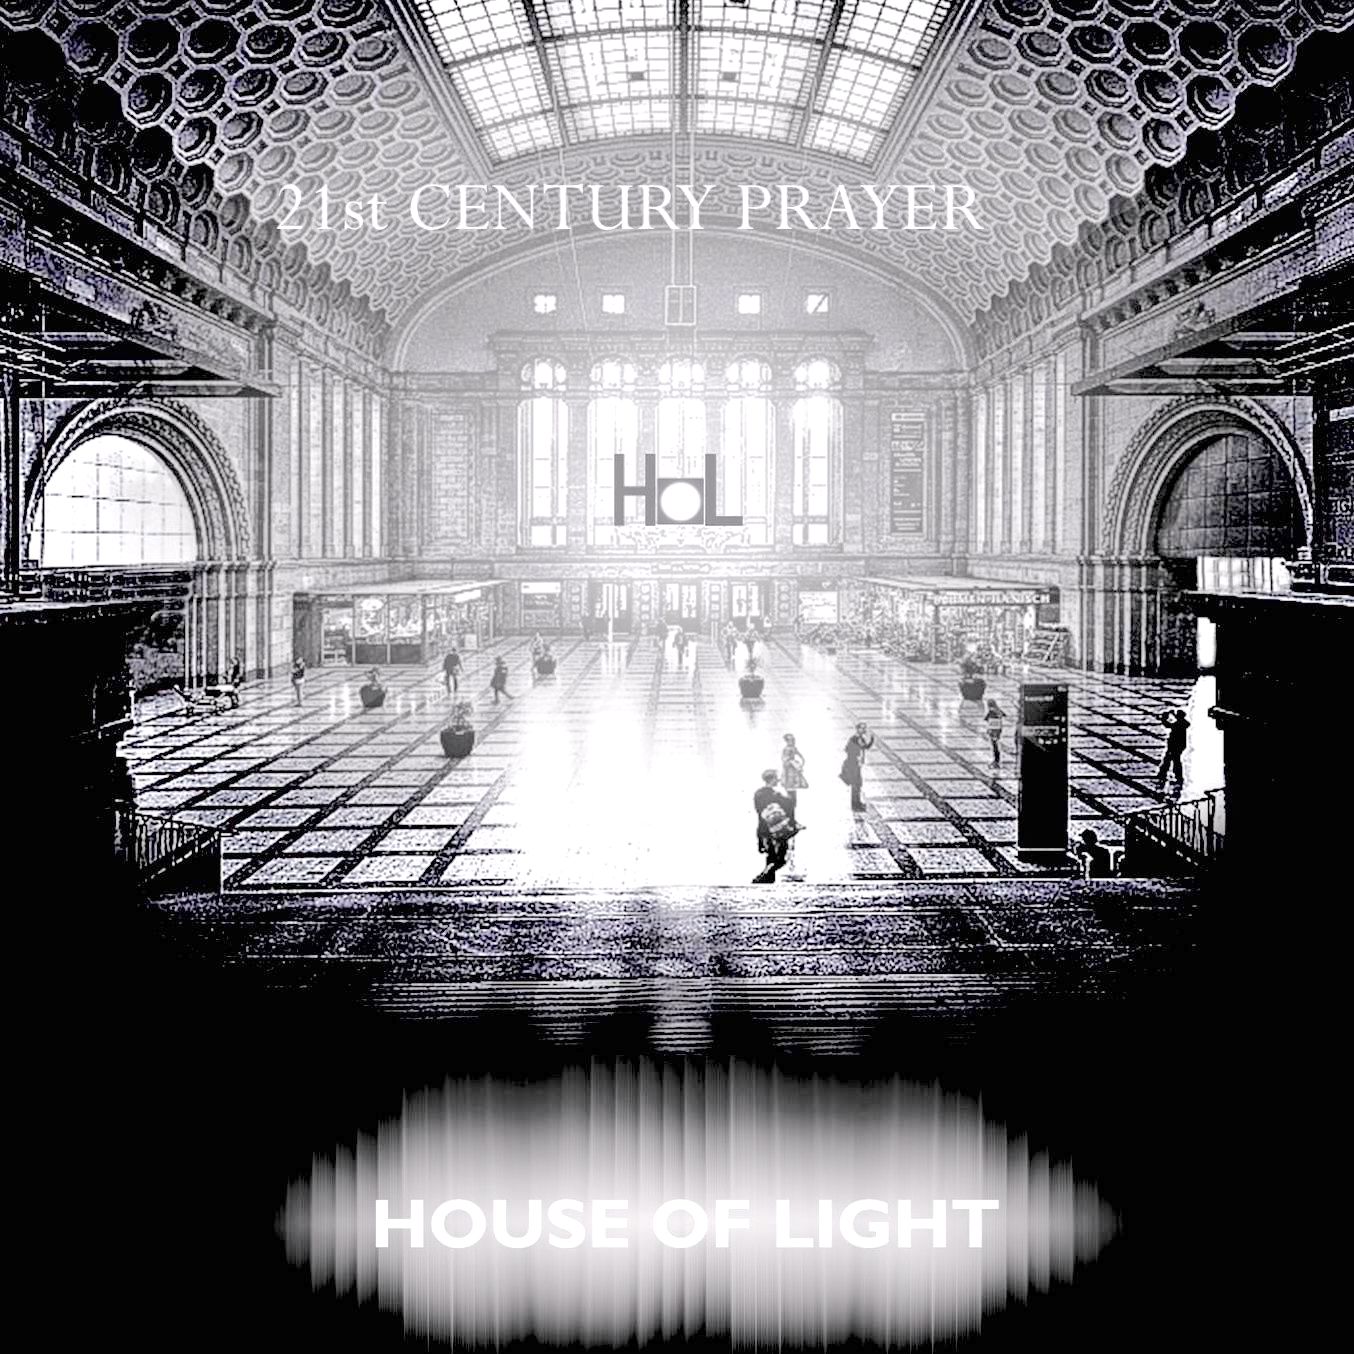  Escucha “21st Century Prayer”, el nuevo álbum de House of Light